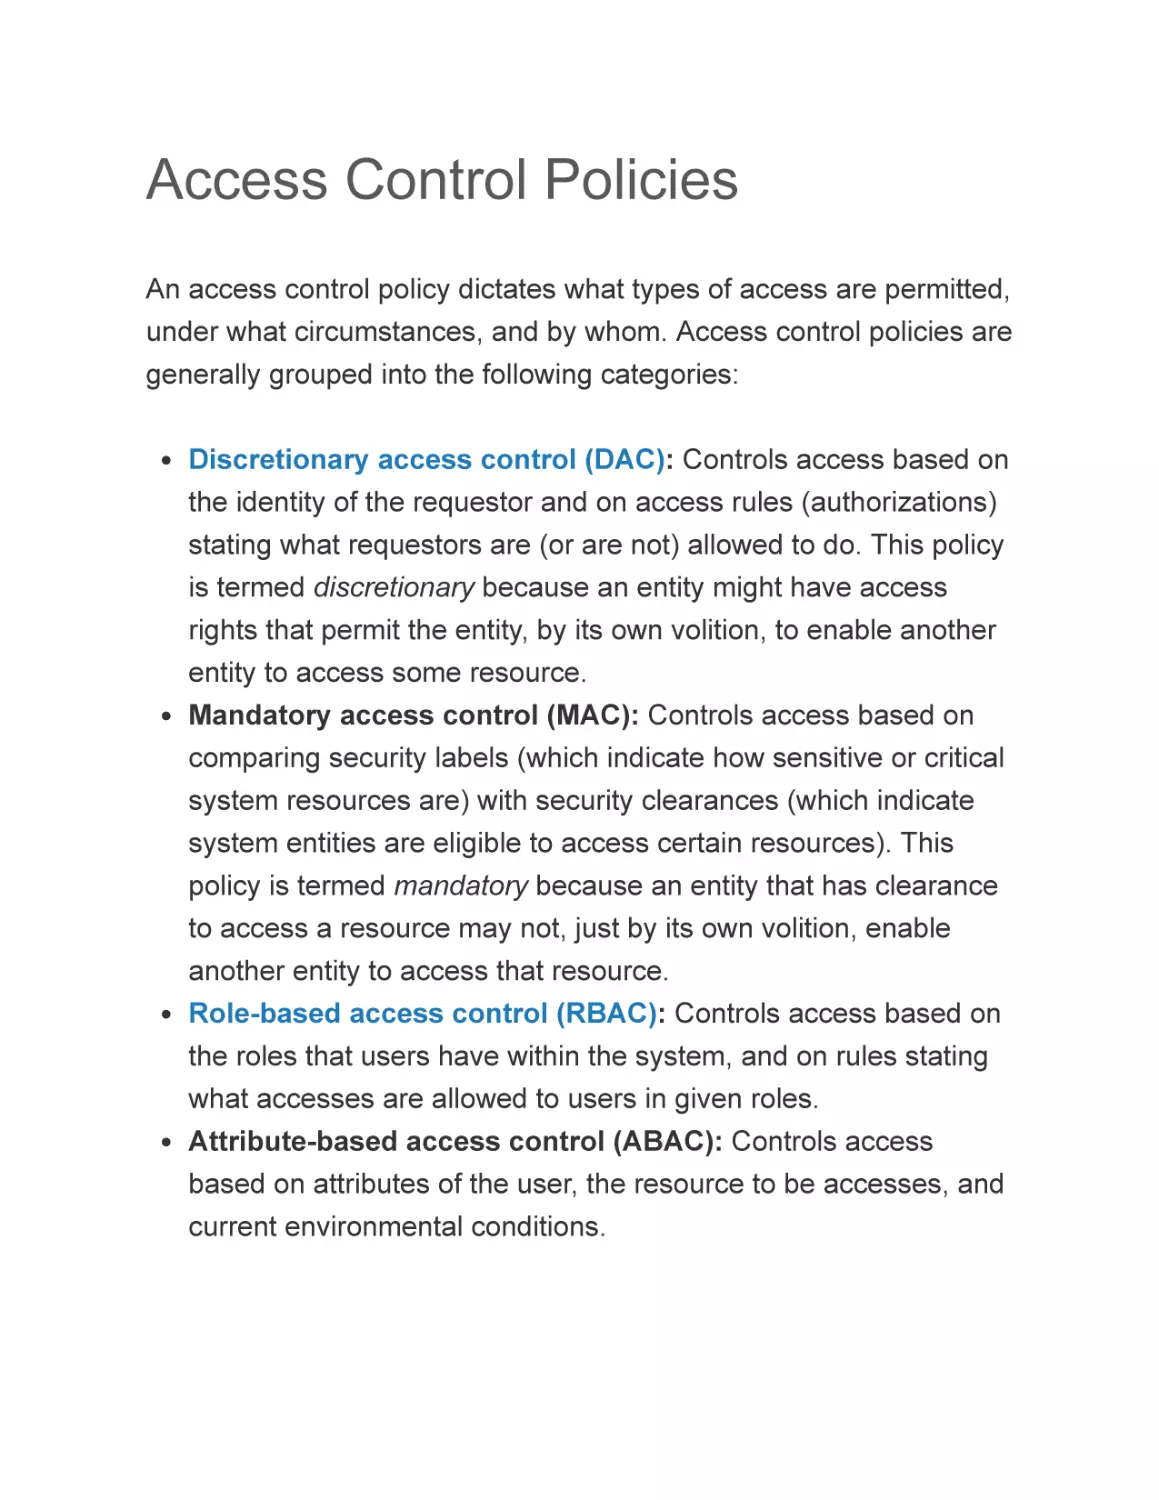 Access Control Policies